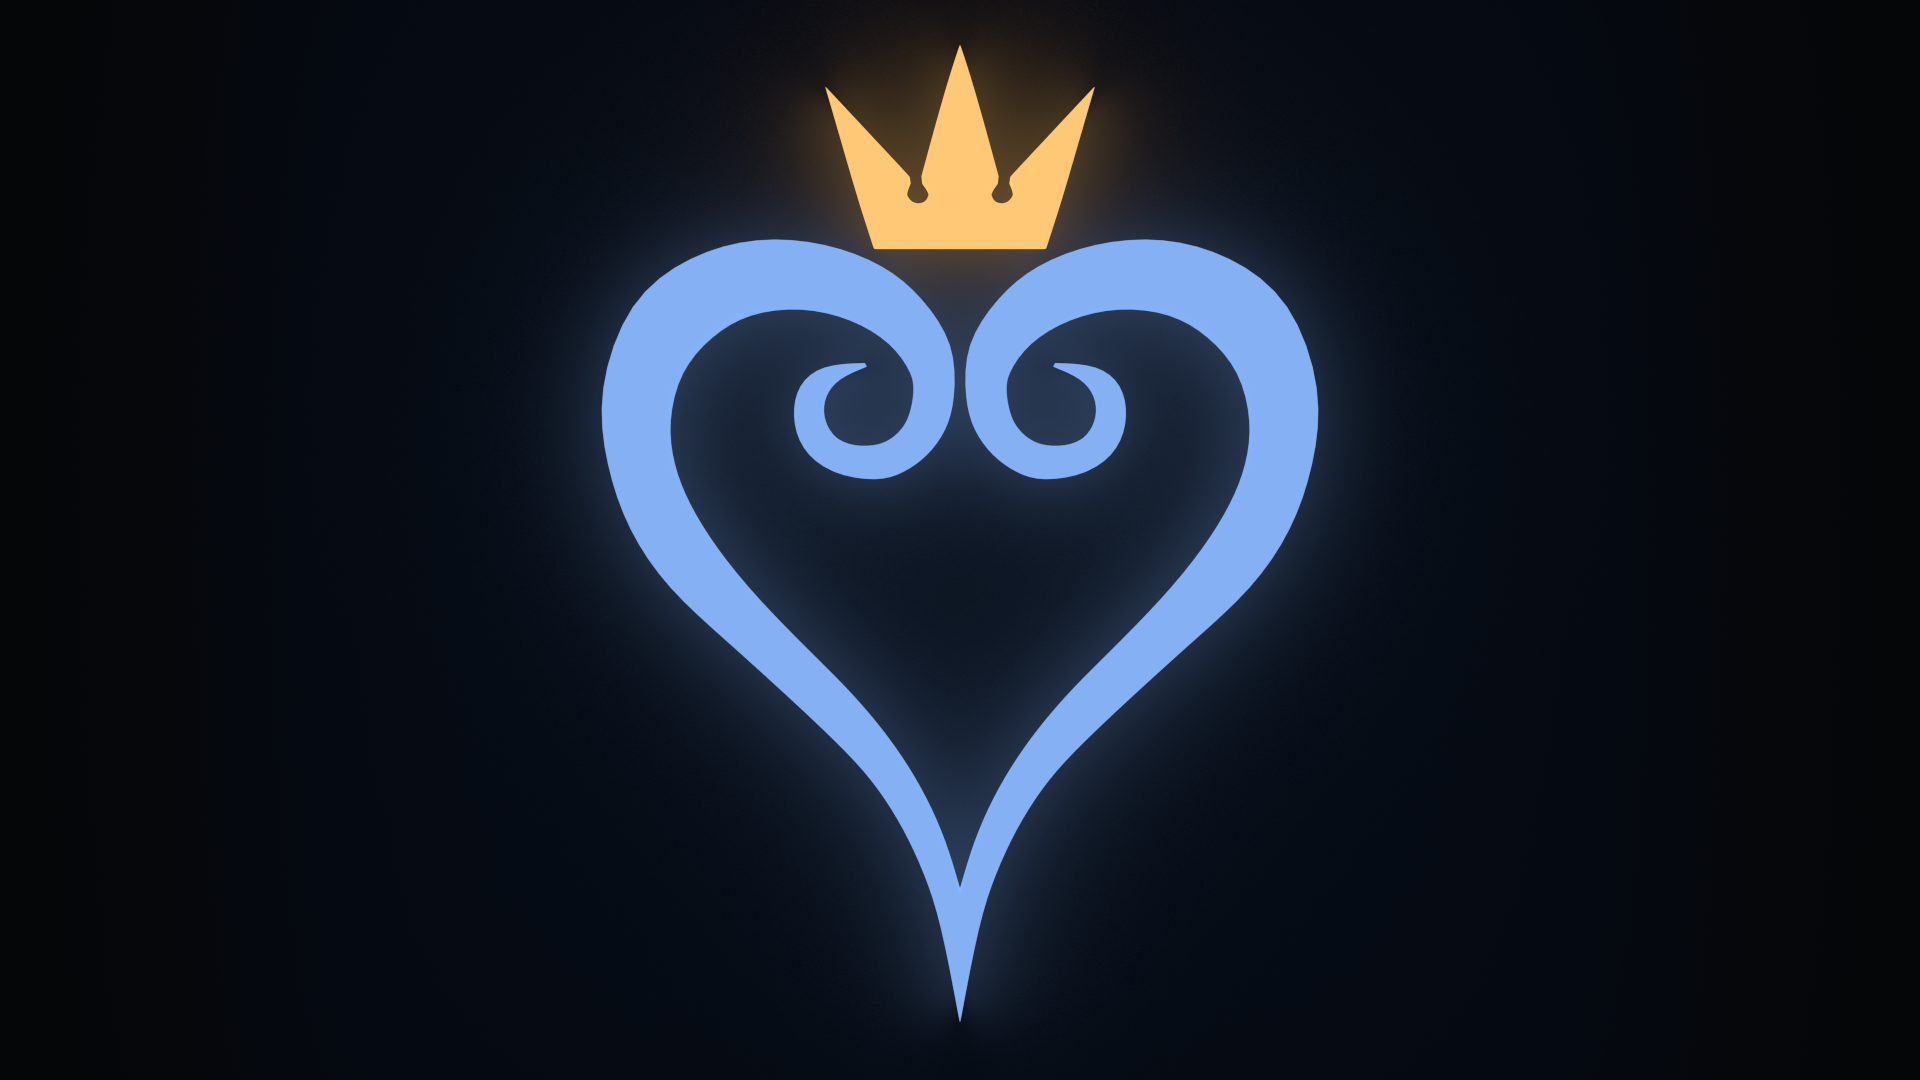  Kingdom Hearts Logo  Wallpaper by abluescarab on DeviantArt